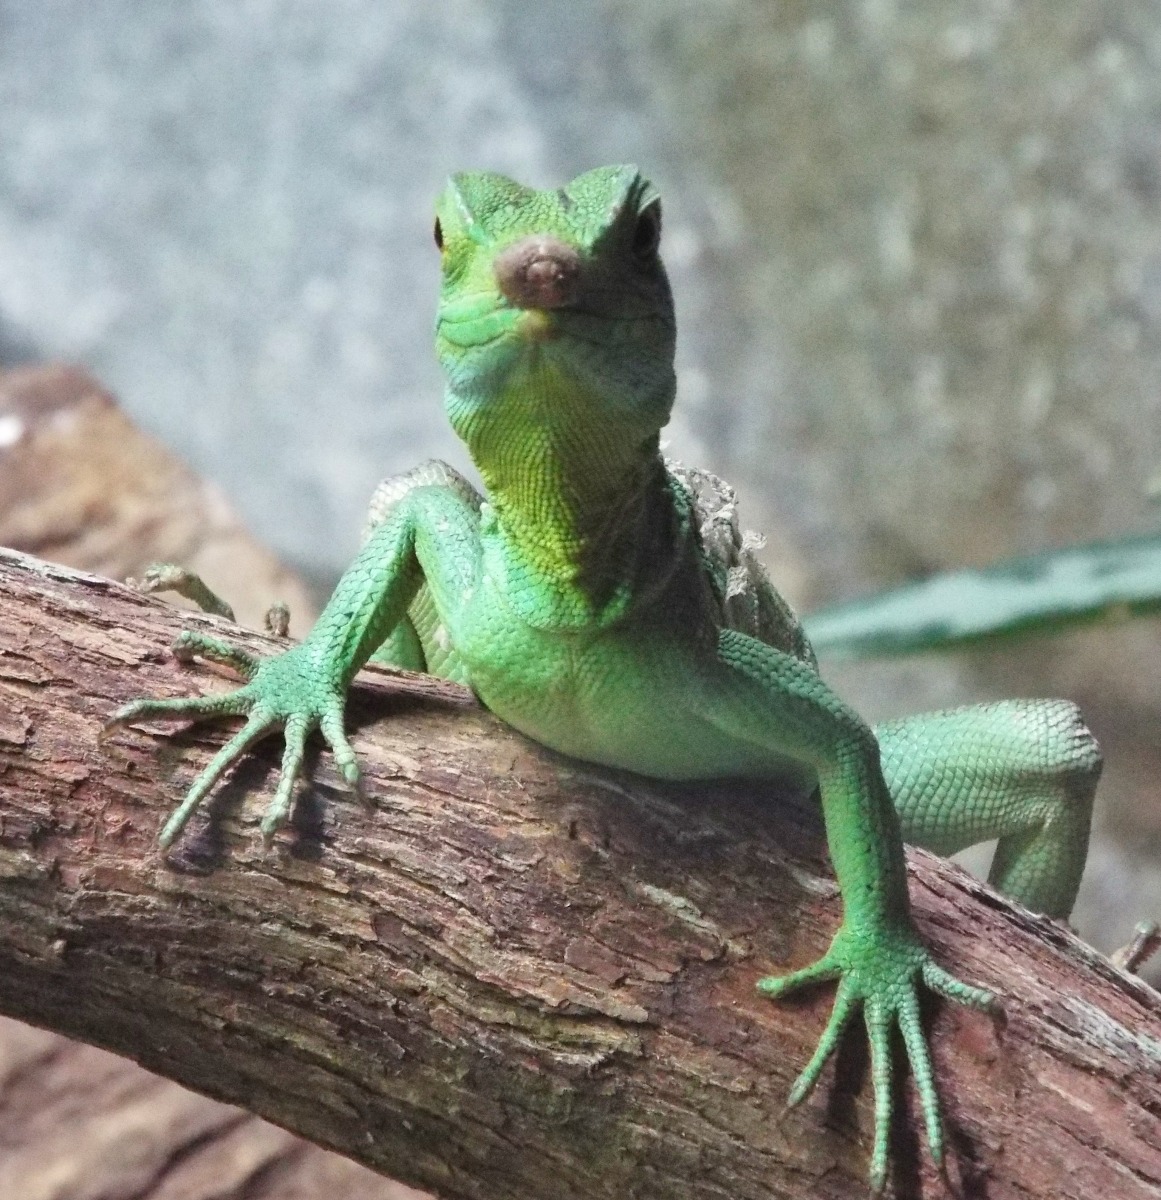 Green Lizard - Insects, Arachnids, Reptiles & Amphibians, Green | Lizard | Skin | Eye | Eyes | Amphibian | Scales